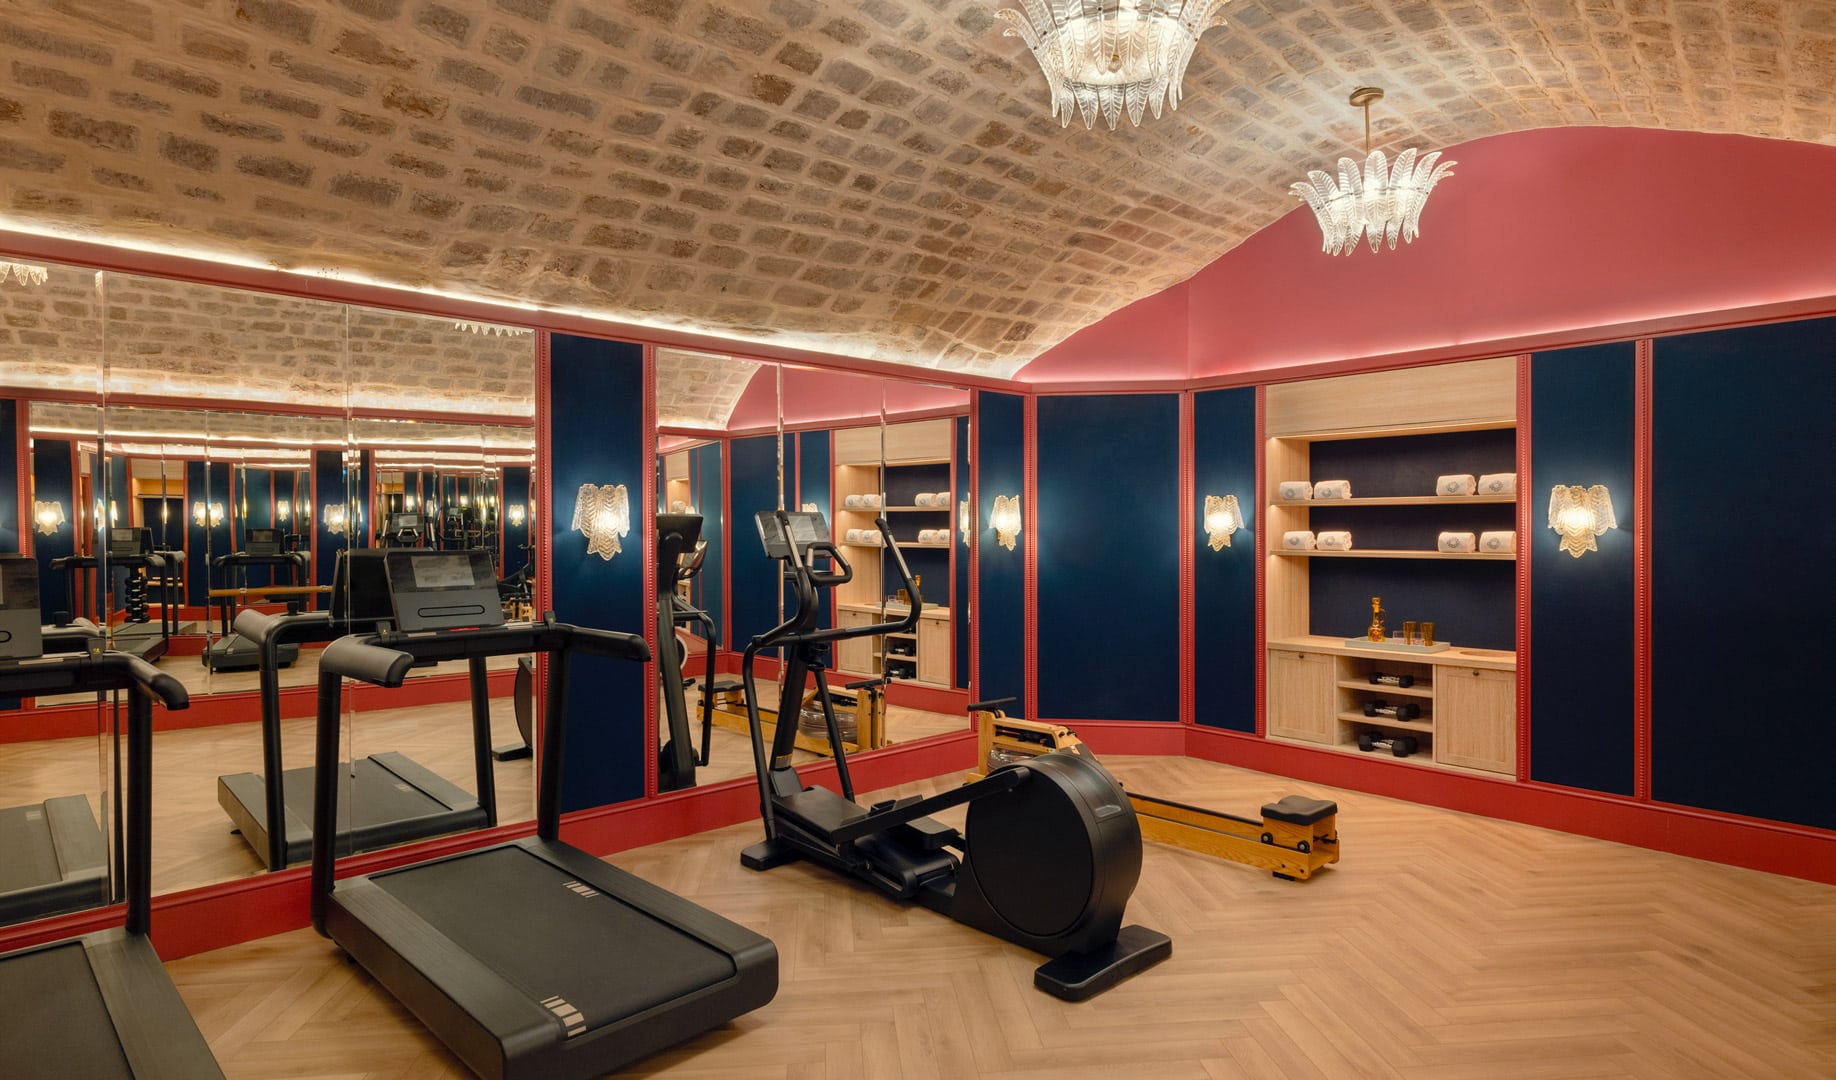 Salle de fitness Le grand Mazarin @VincentLeroux